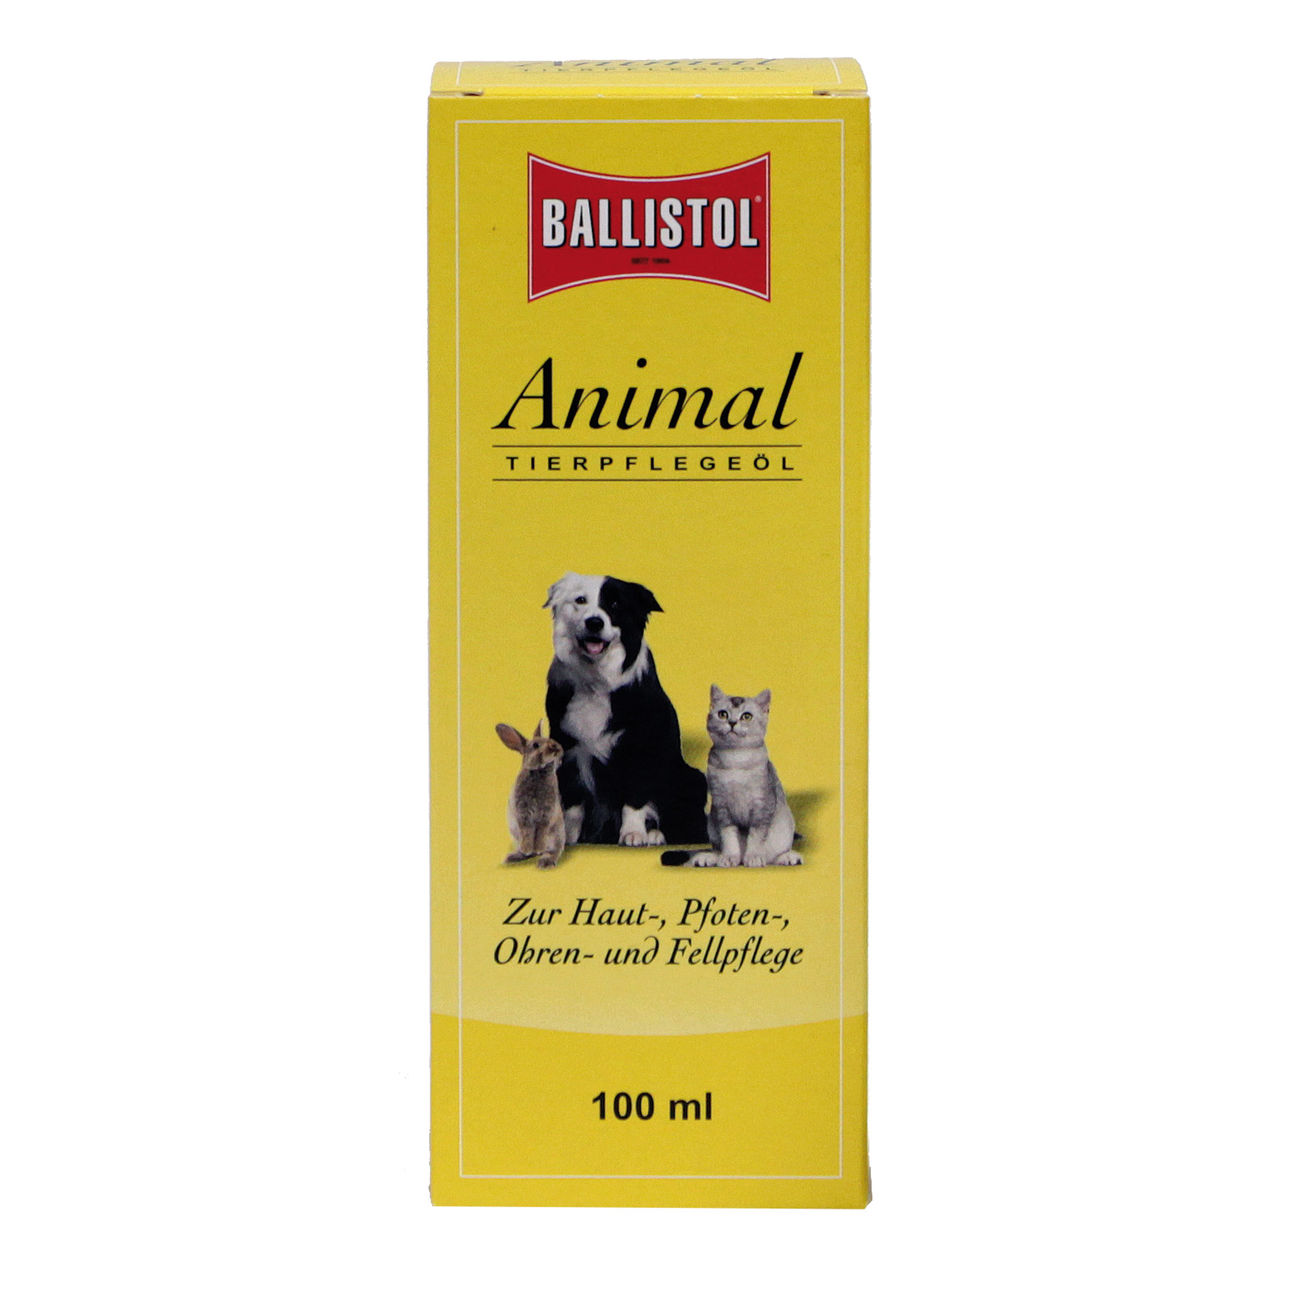 Ballistol Tierpflegeöl Animal 100 ml Bild 1